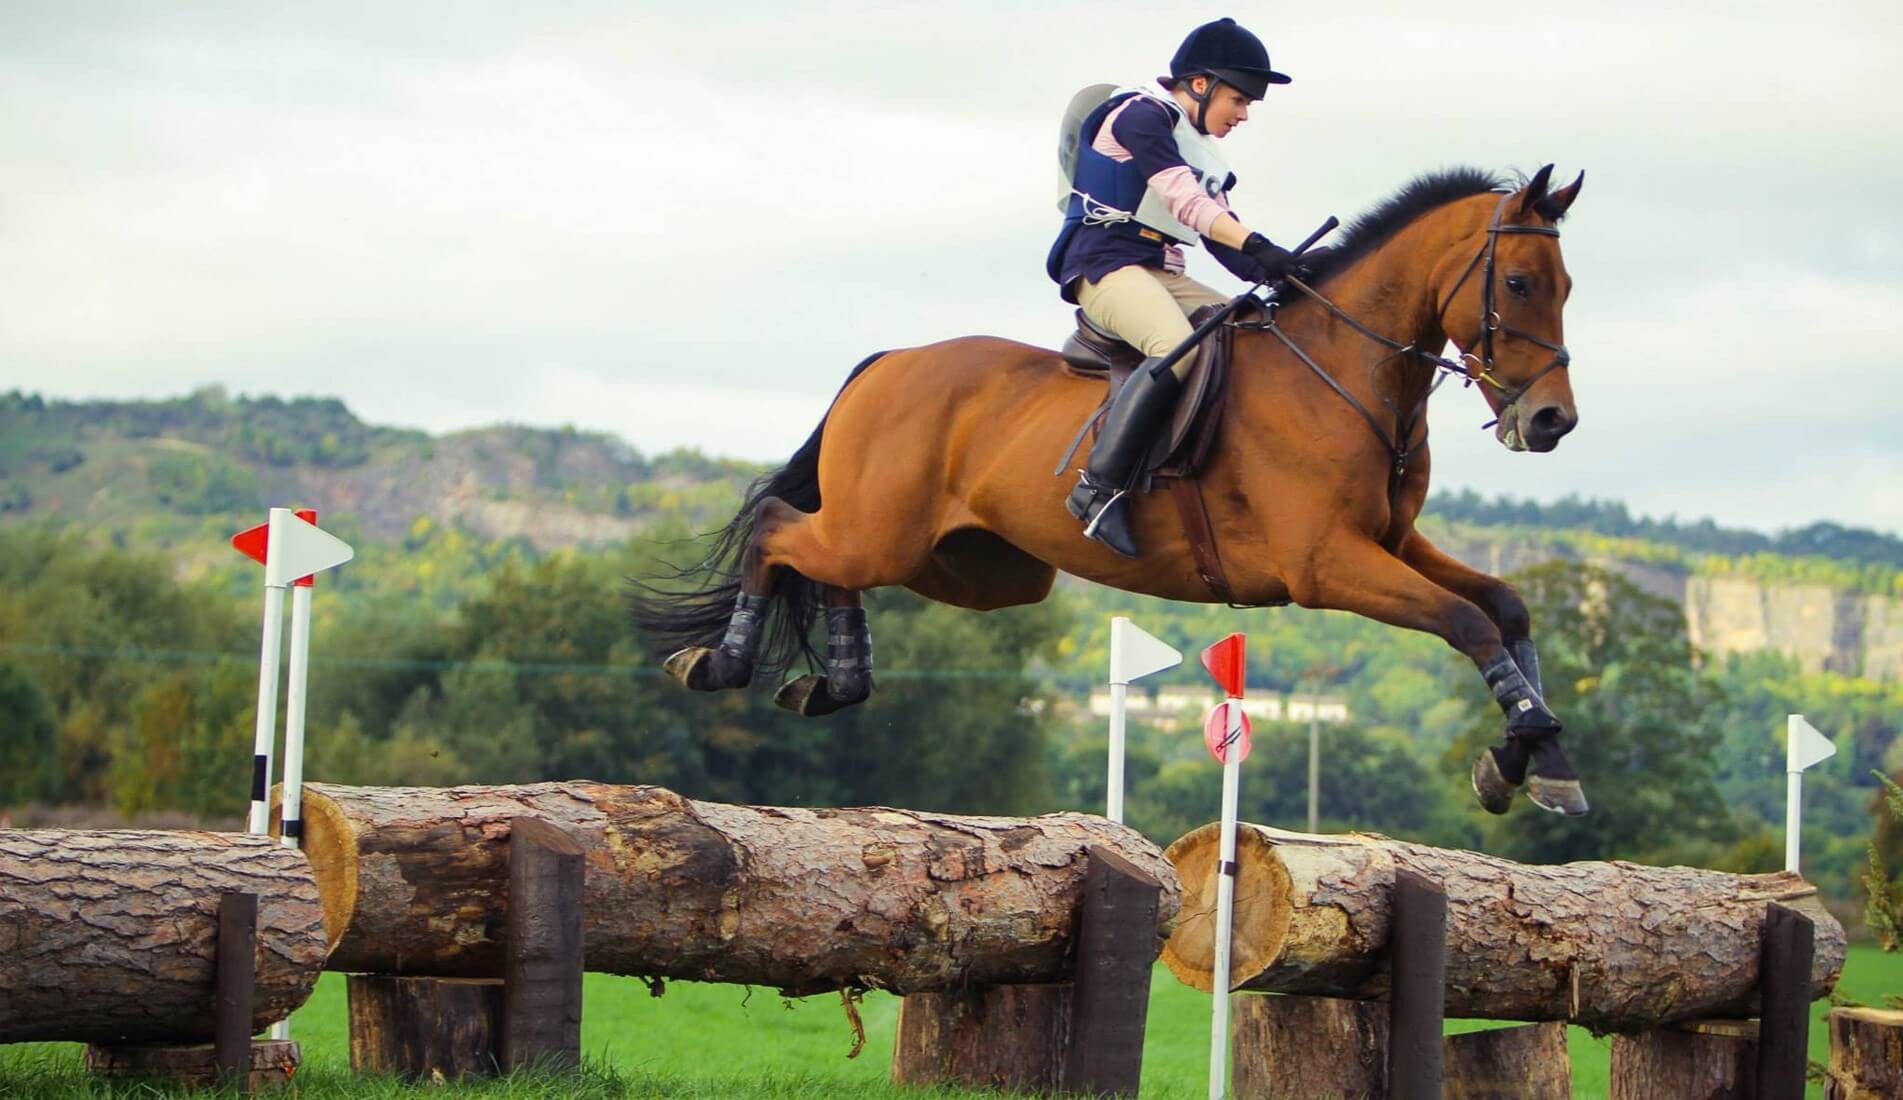 Radfords Equestrian - British Dressage, Eventing, Showjumping & Livery